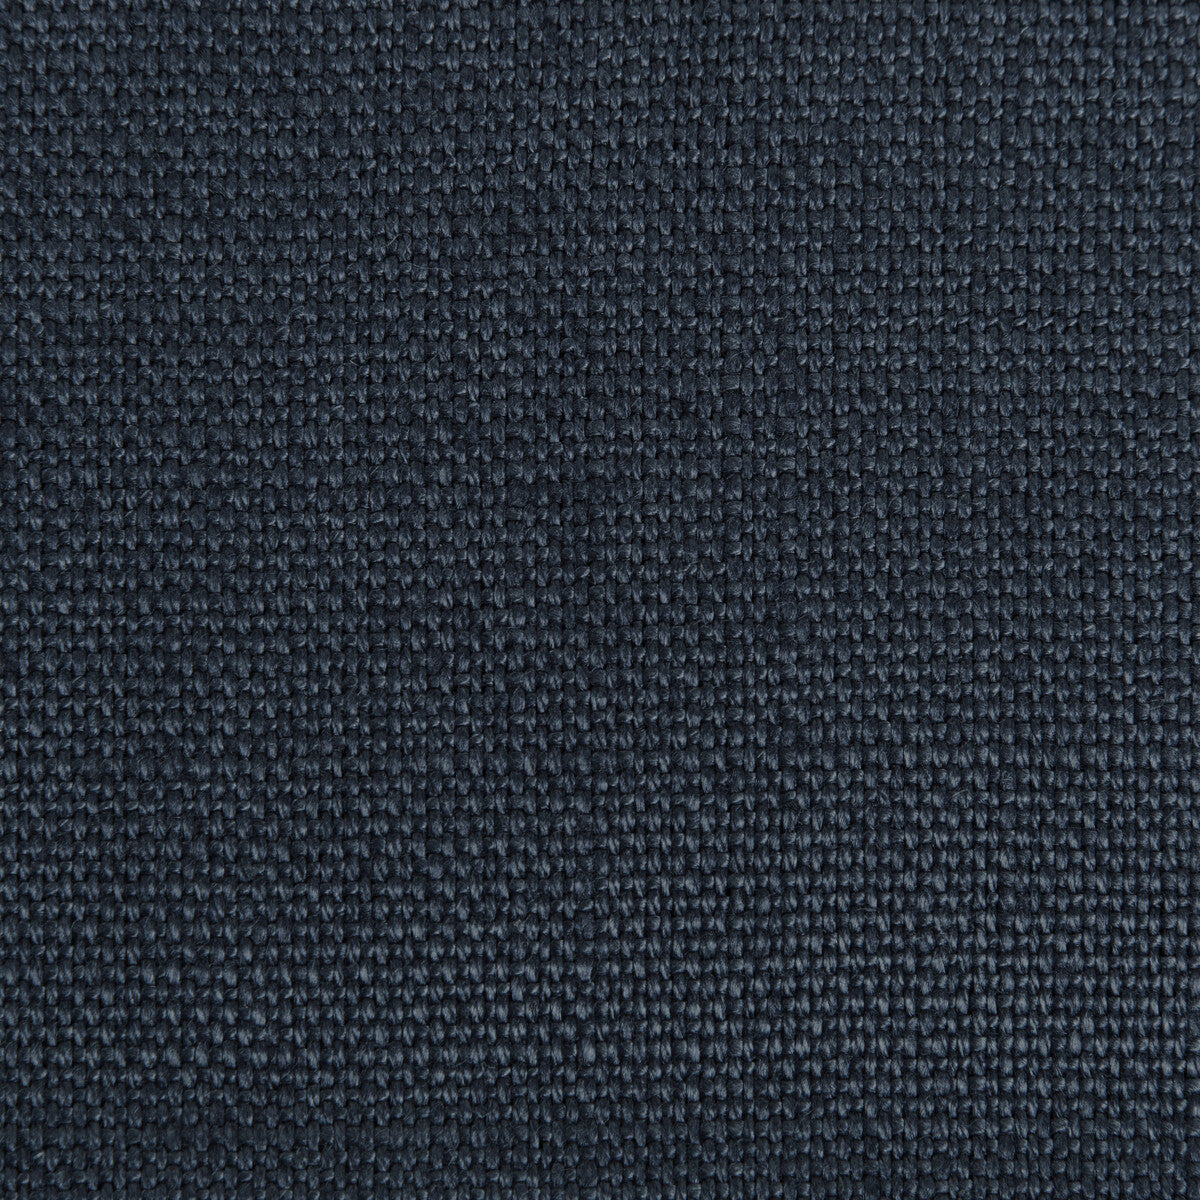 Stone Harbor fabric in indigo color - pattern 27591.550.0 - by Kravet Basics